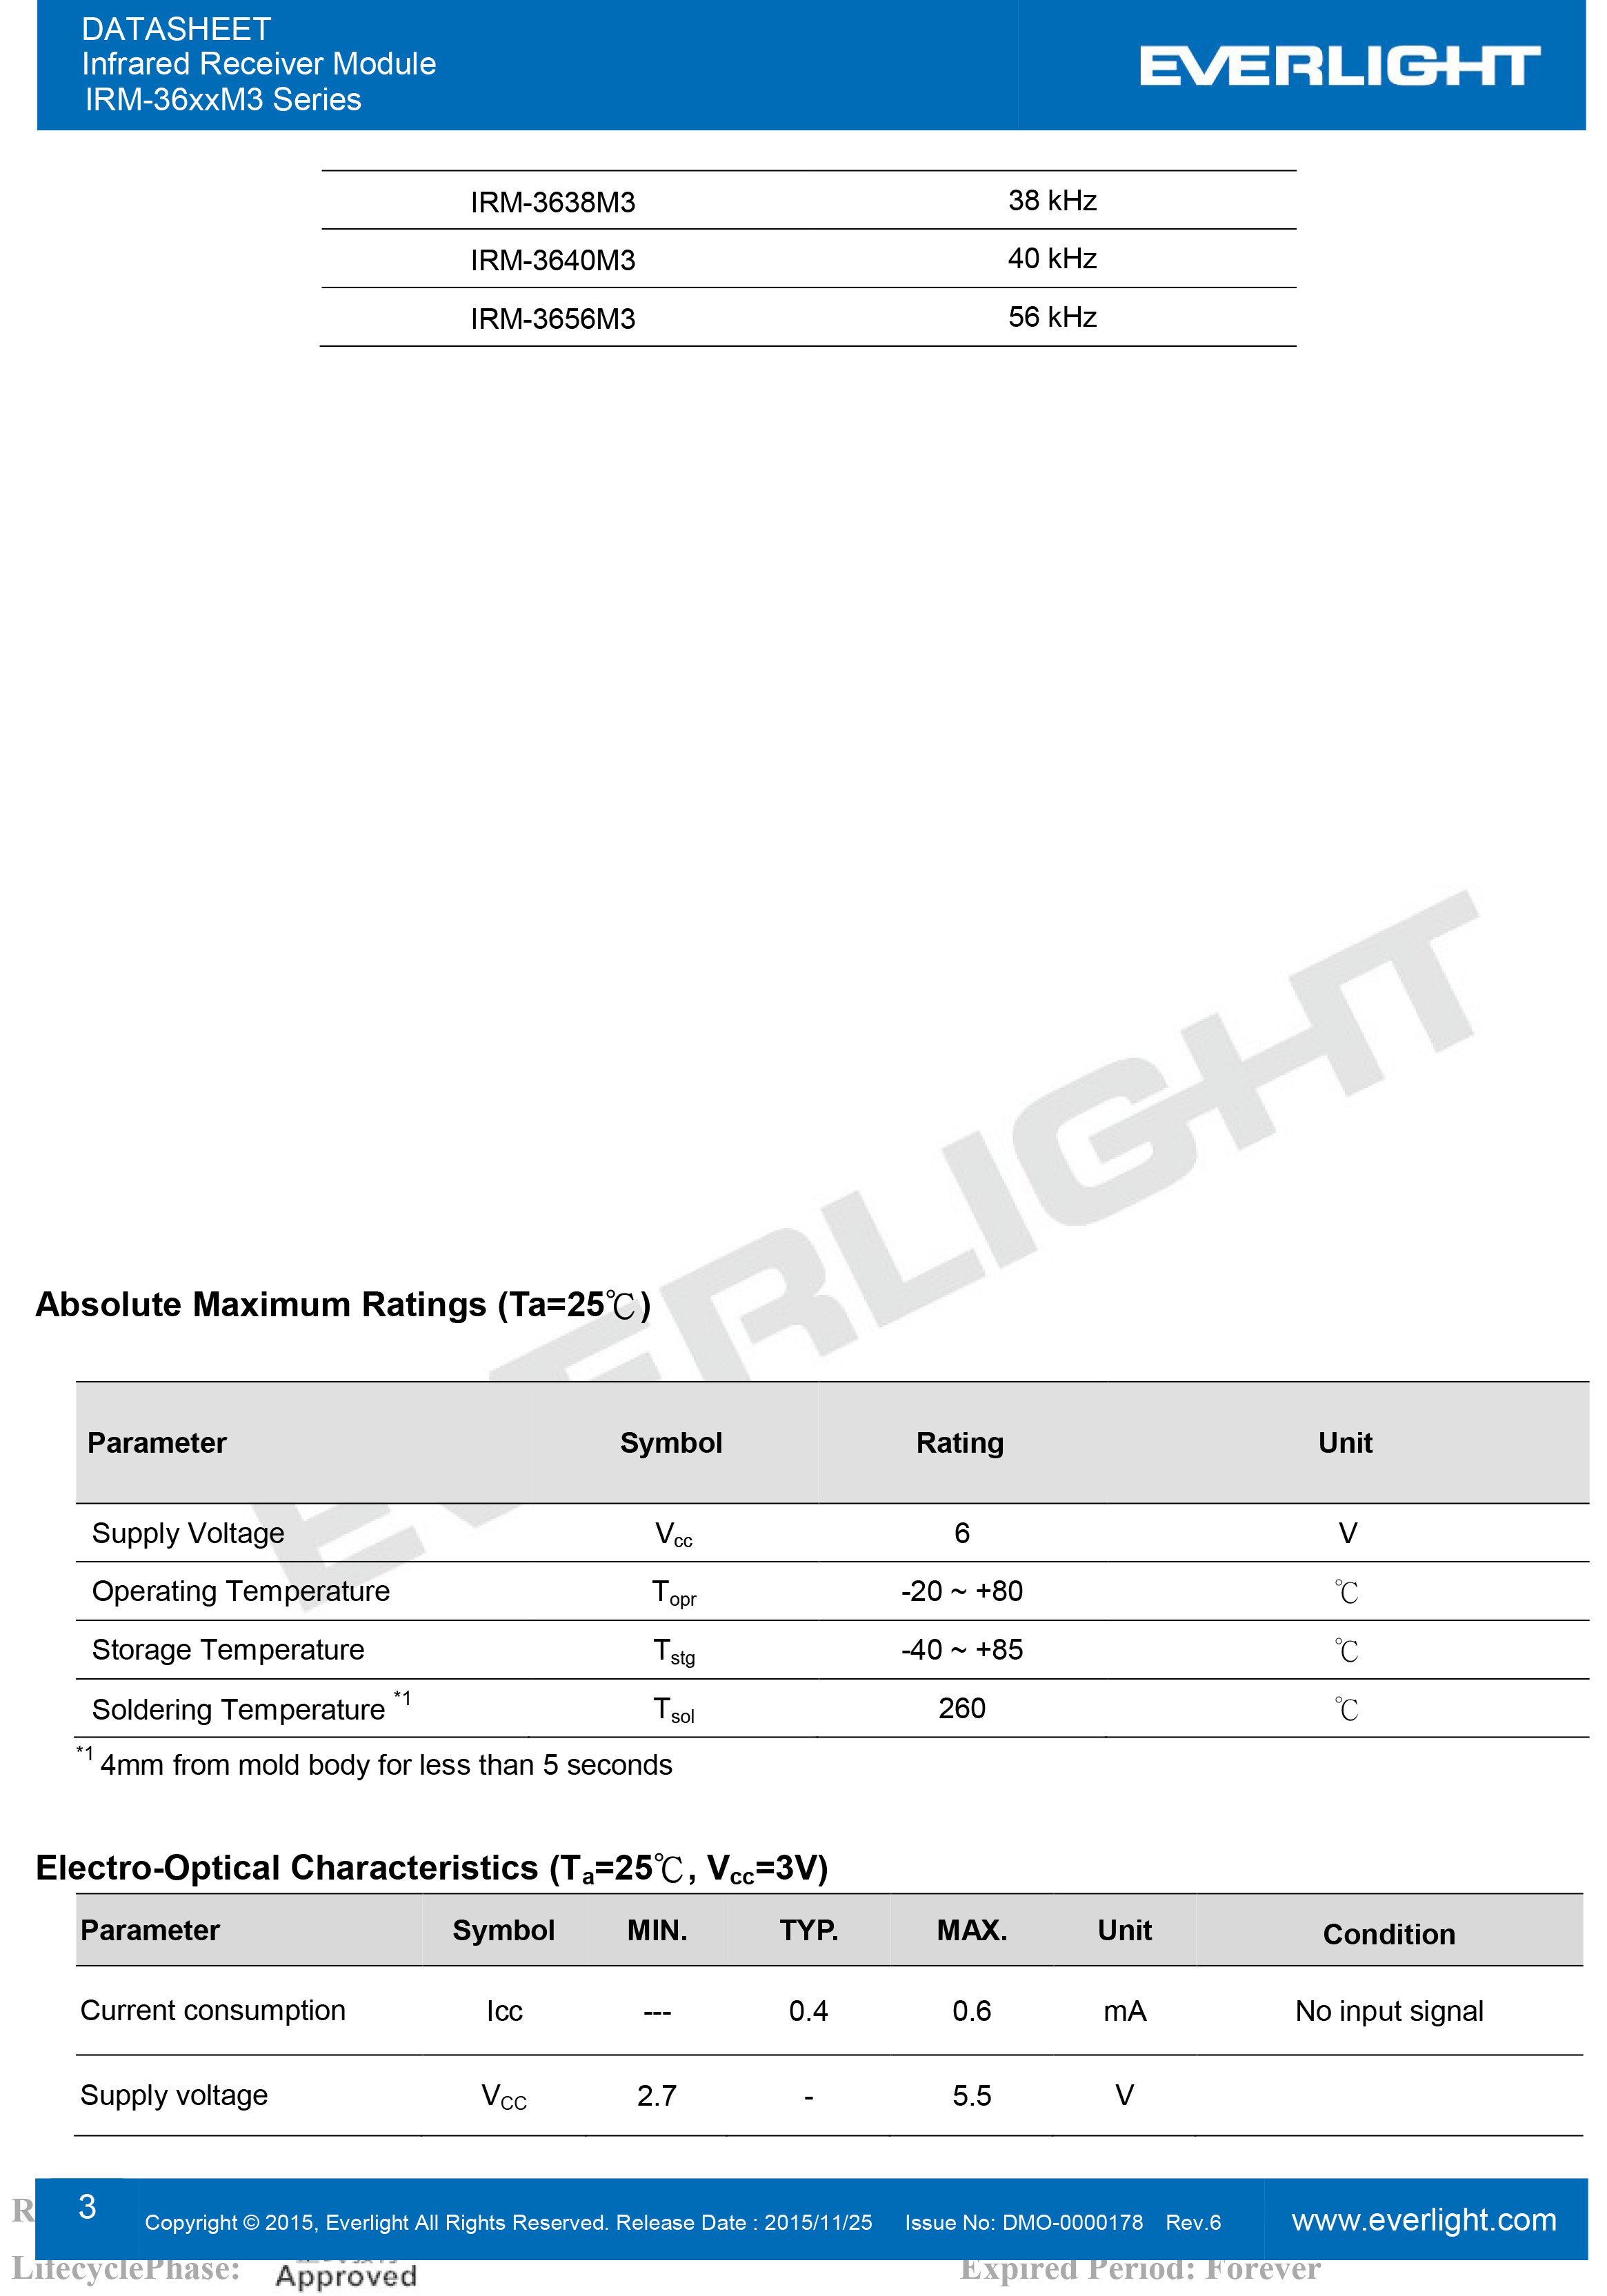 EVERLIGHT Infrared Receiver Module IRM-3656M3 Datasheet